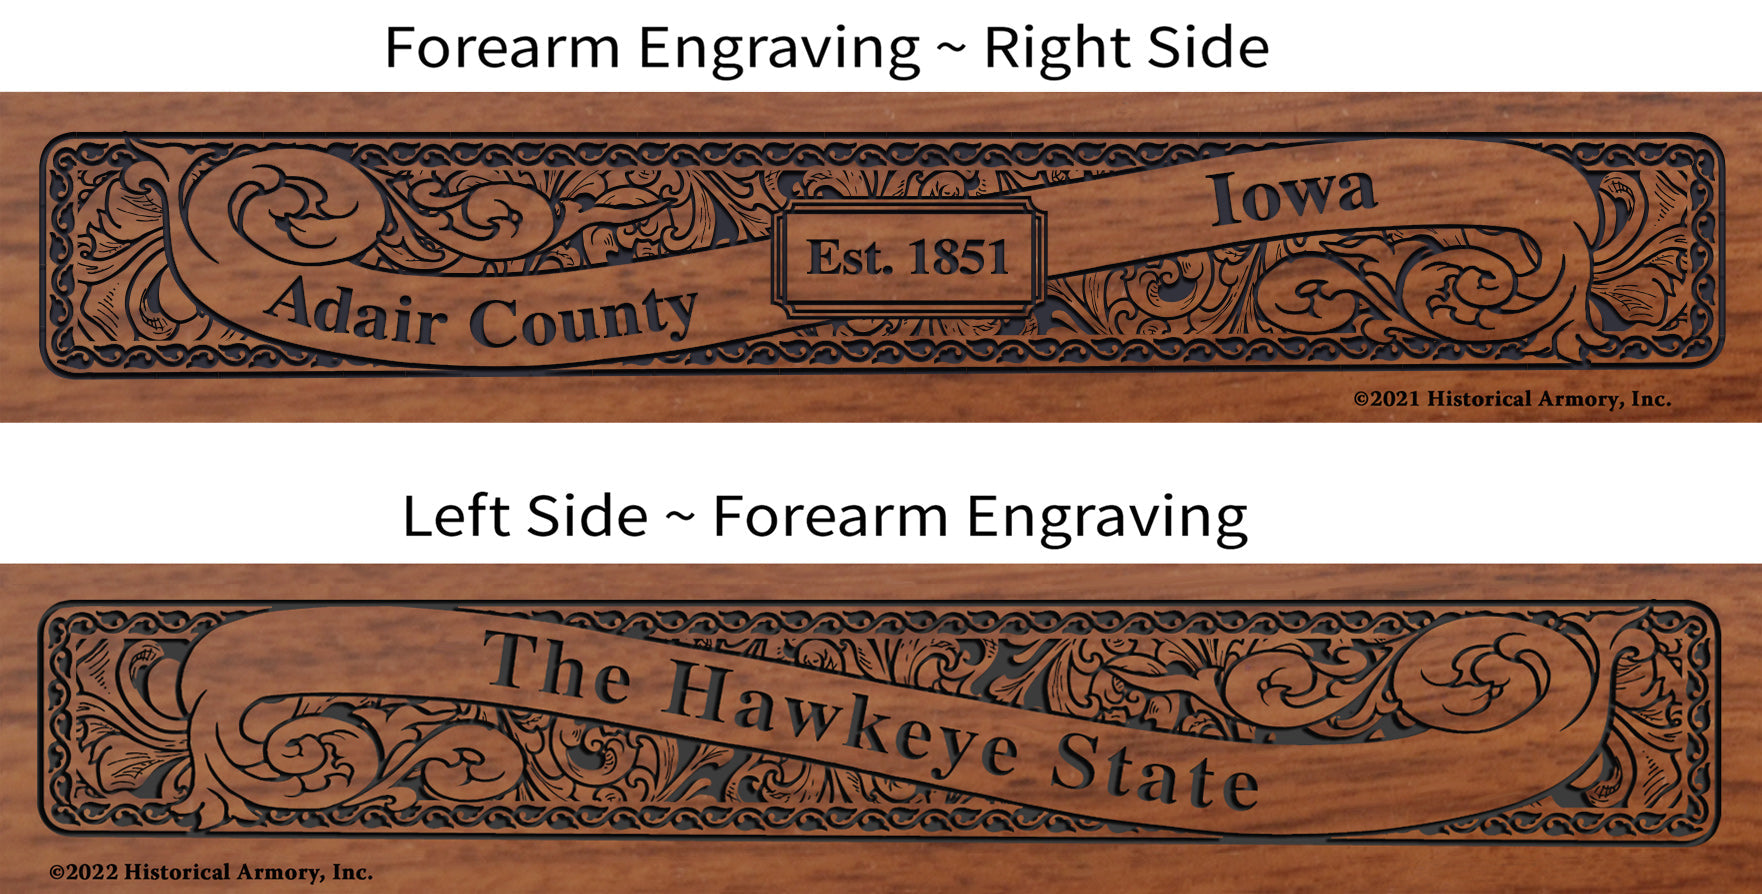 Adair County Iowa Engraved Rifle Forearm